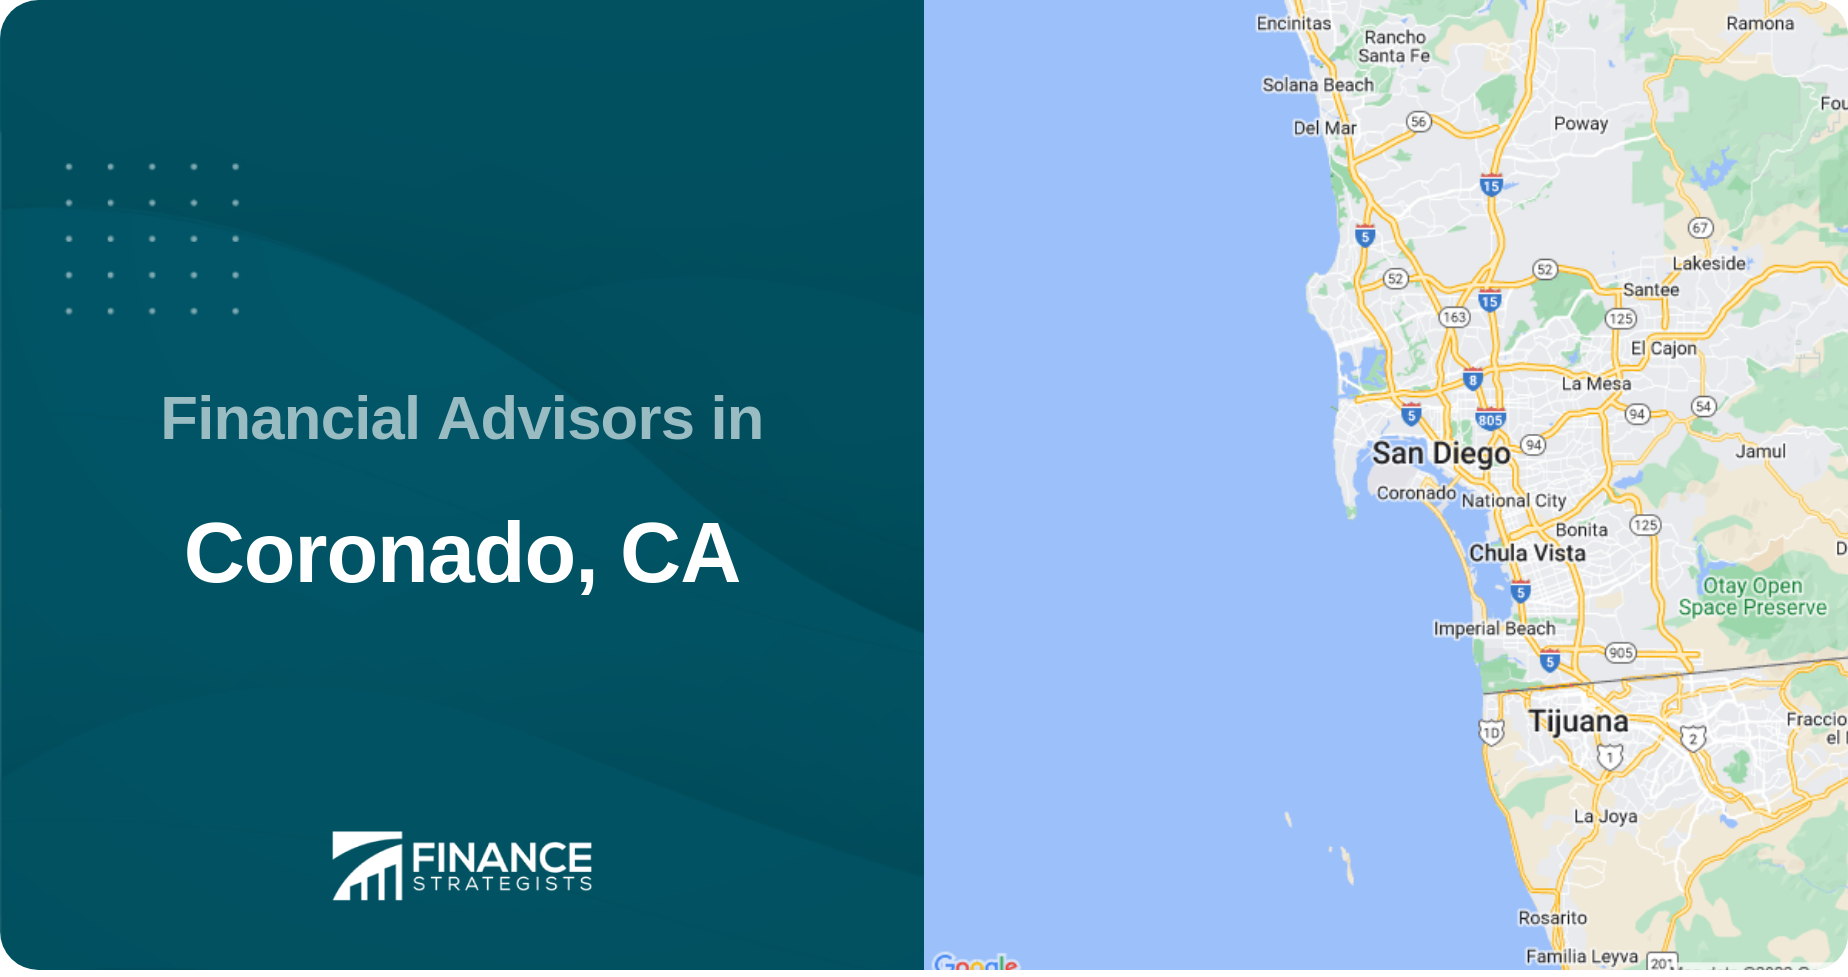 Financial Advisors in Coronado, CA